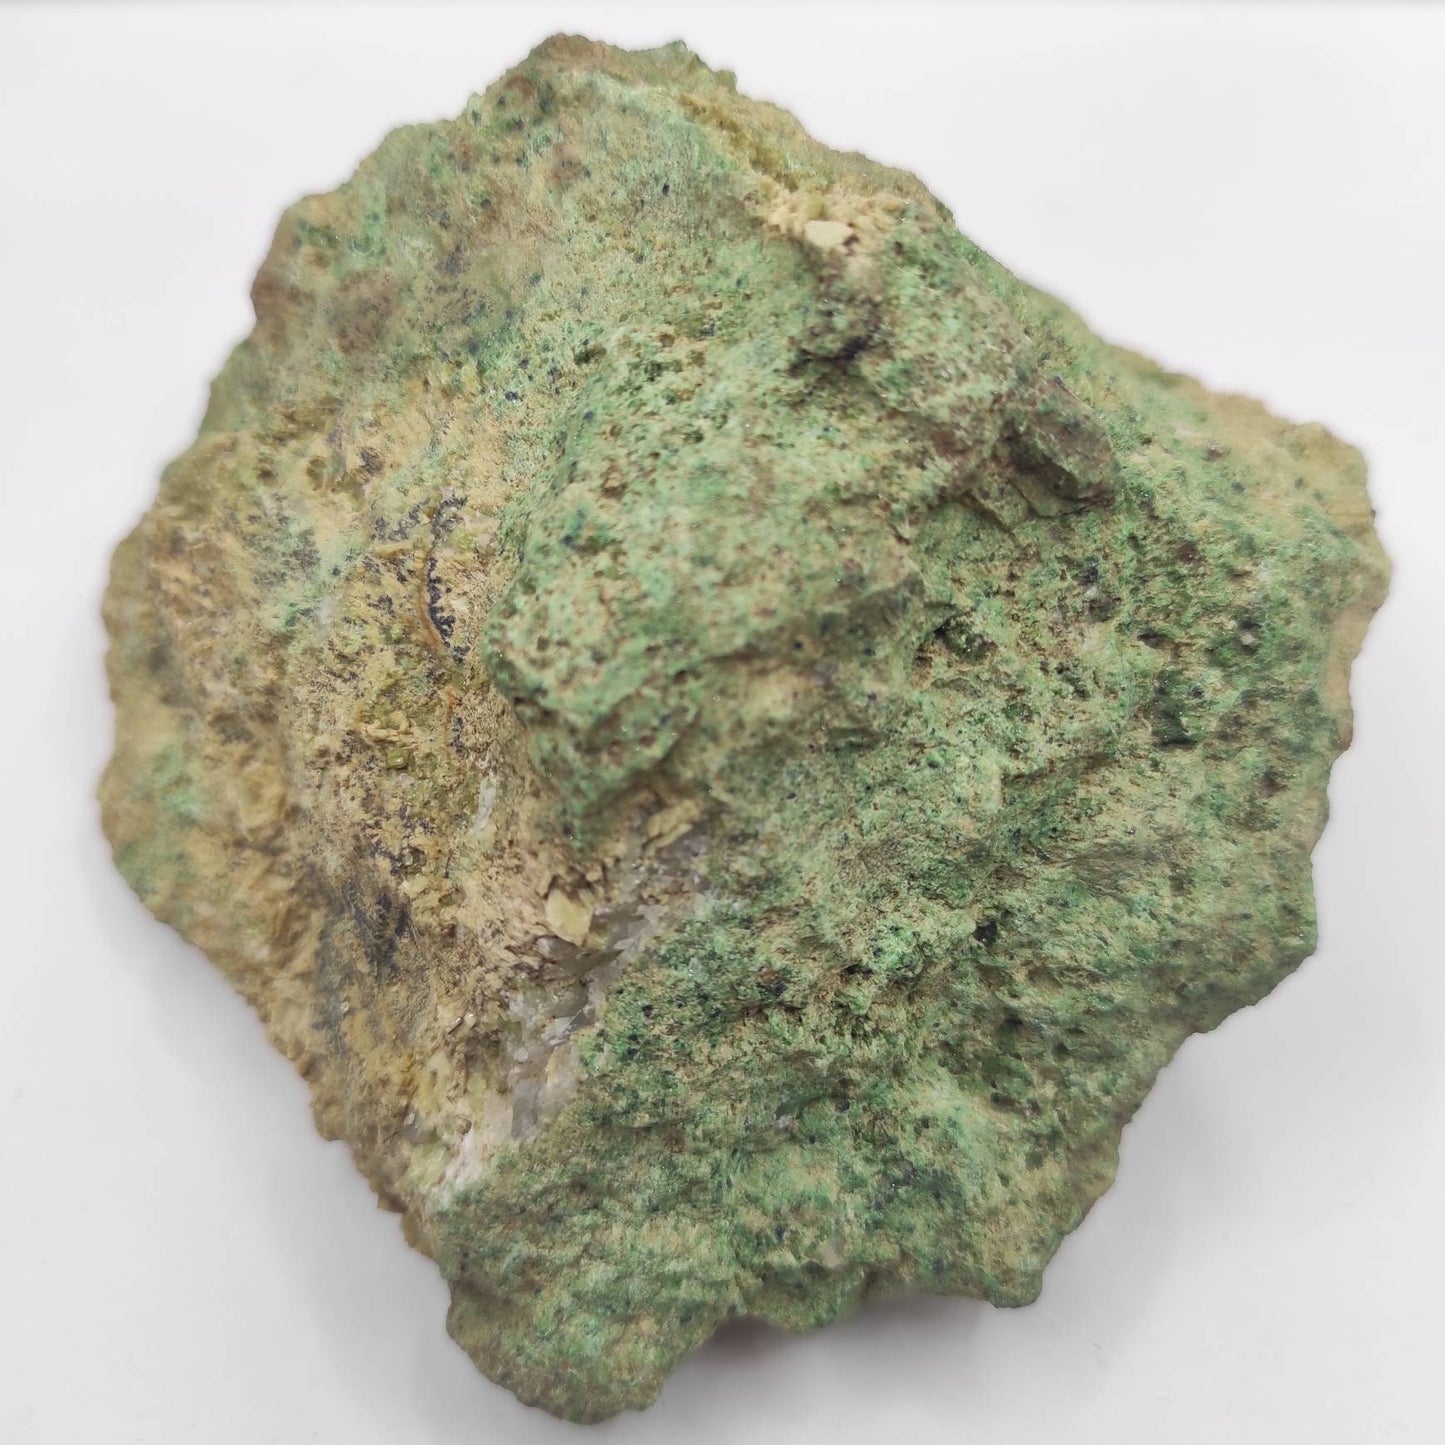 844g Grossular Garnet and Diopside Mineral Specimen - St Denis de Brompton, Quebec - Green Grossular from Canada - Large Green Mineral